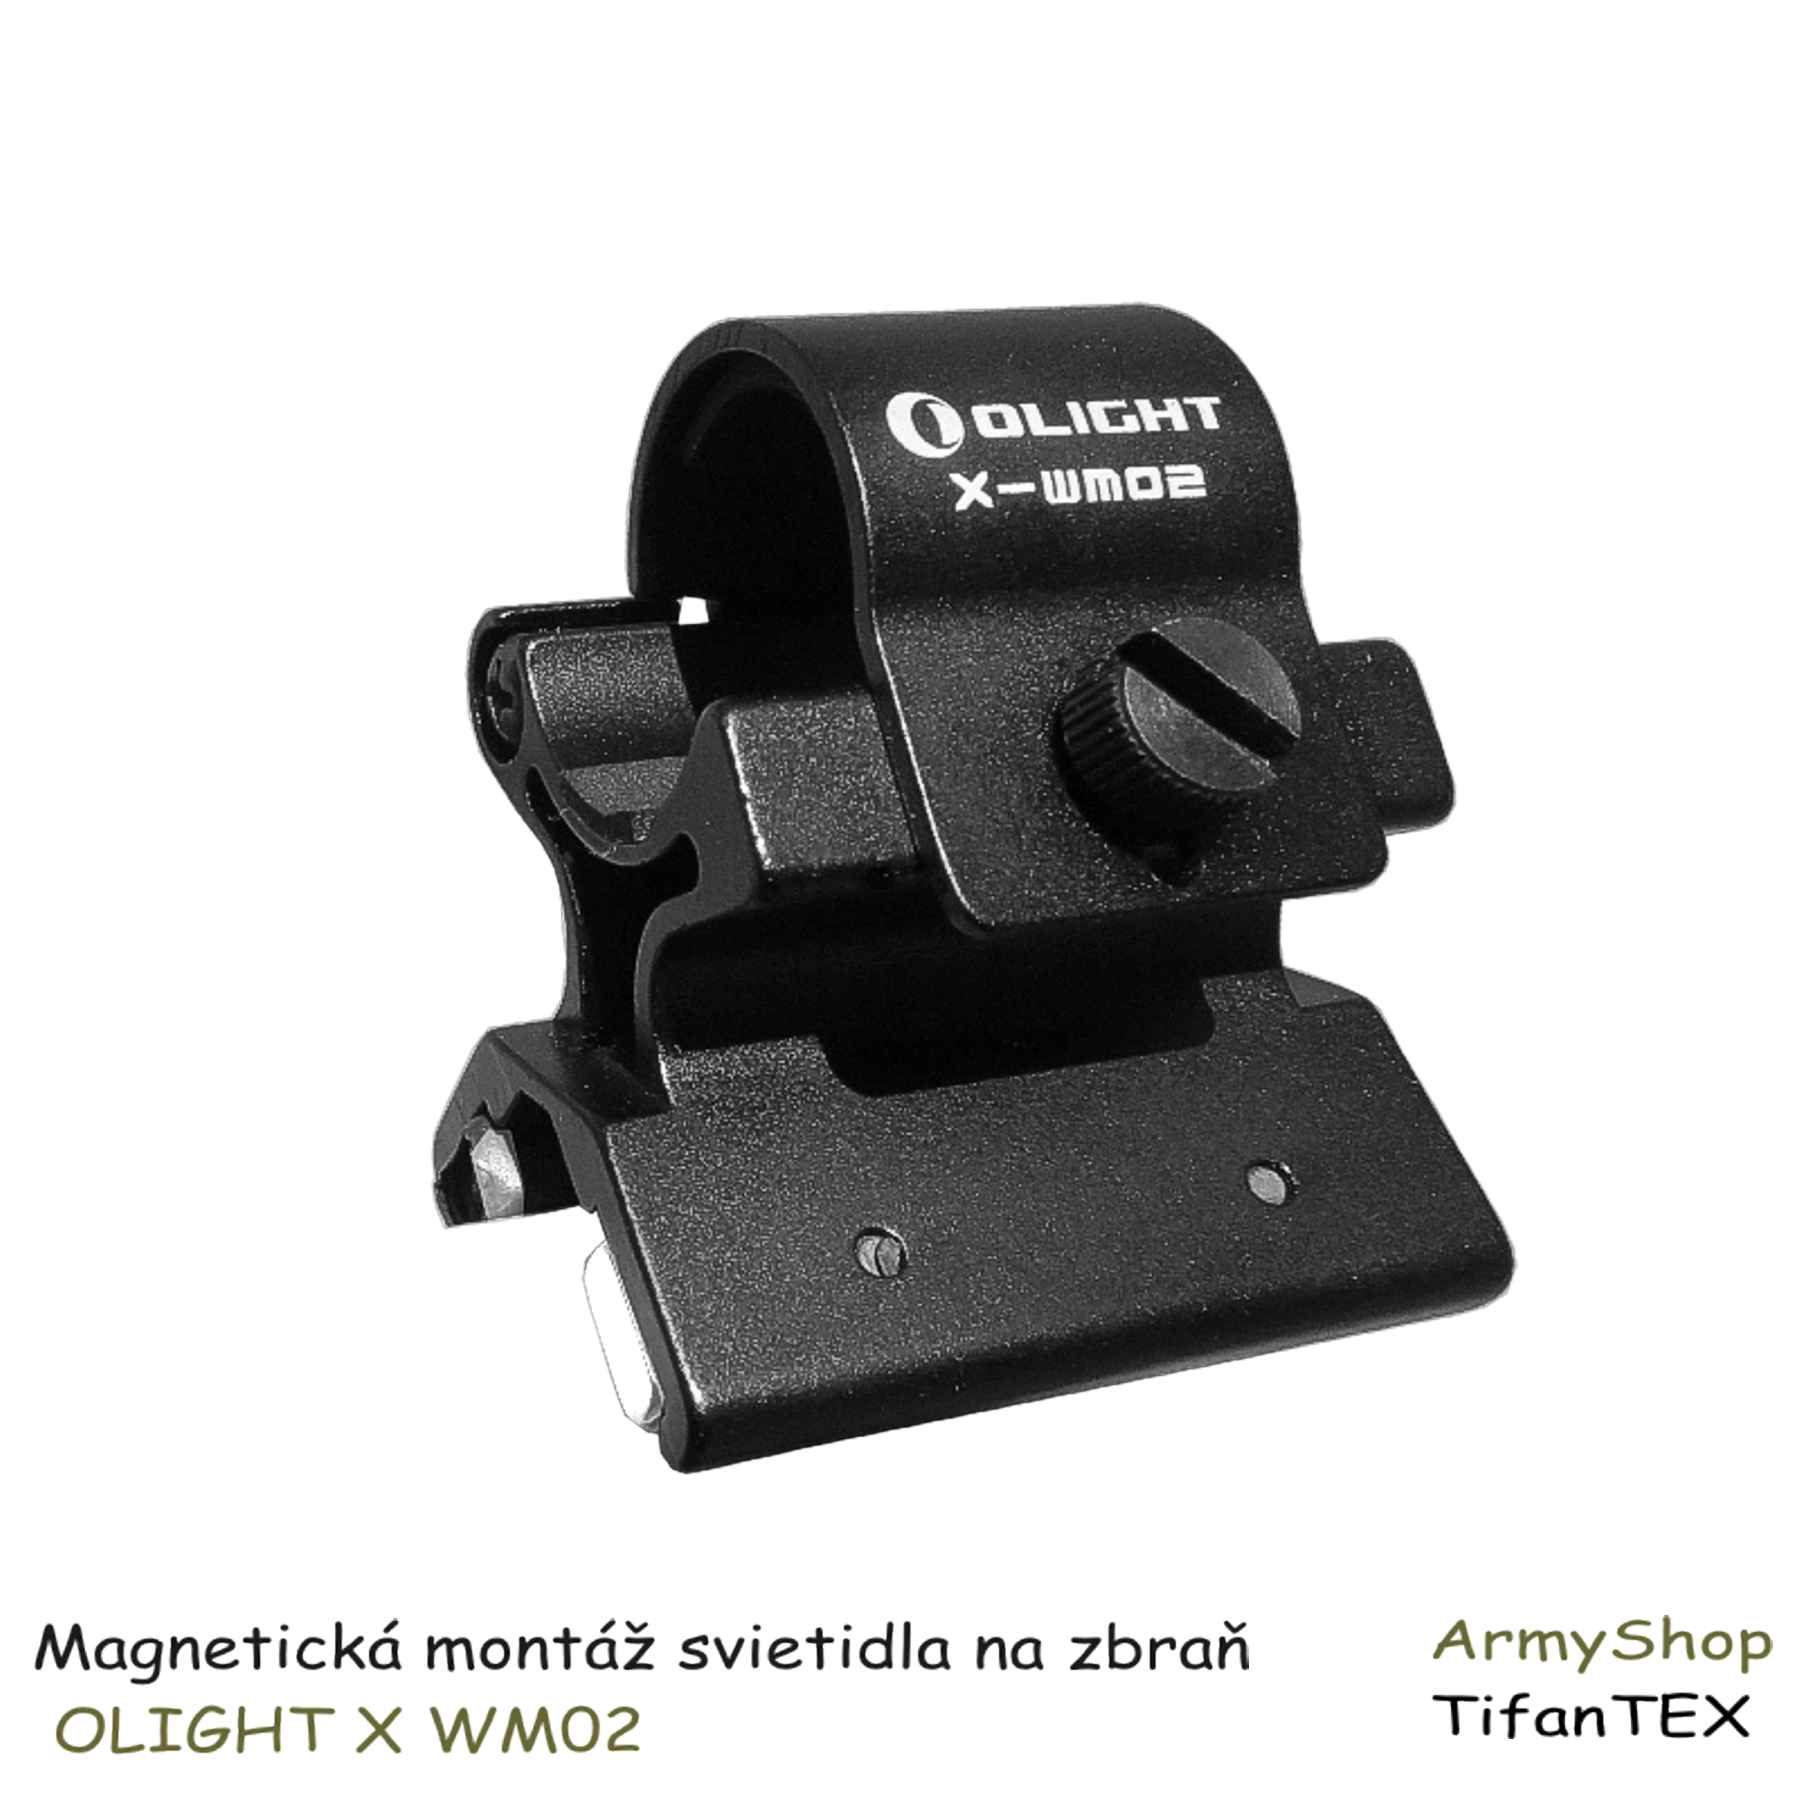 Rýchla magnetická montáž svietidla na zbraň OLIGHT X WM02, armyshop veľkoobchod